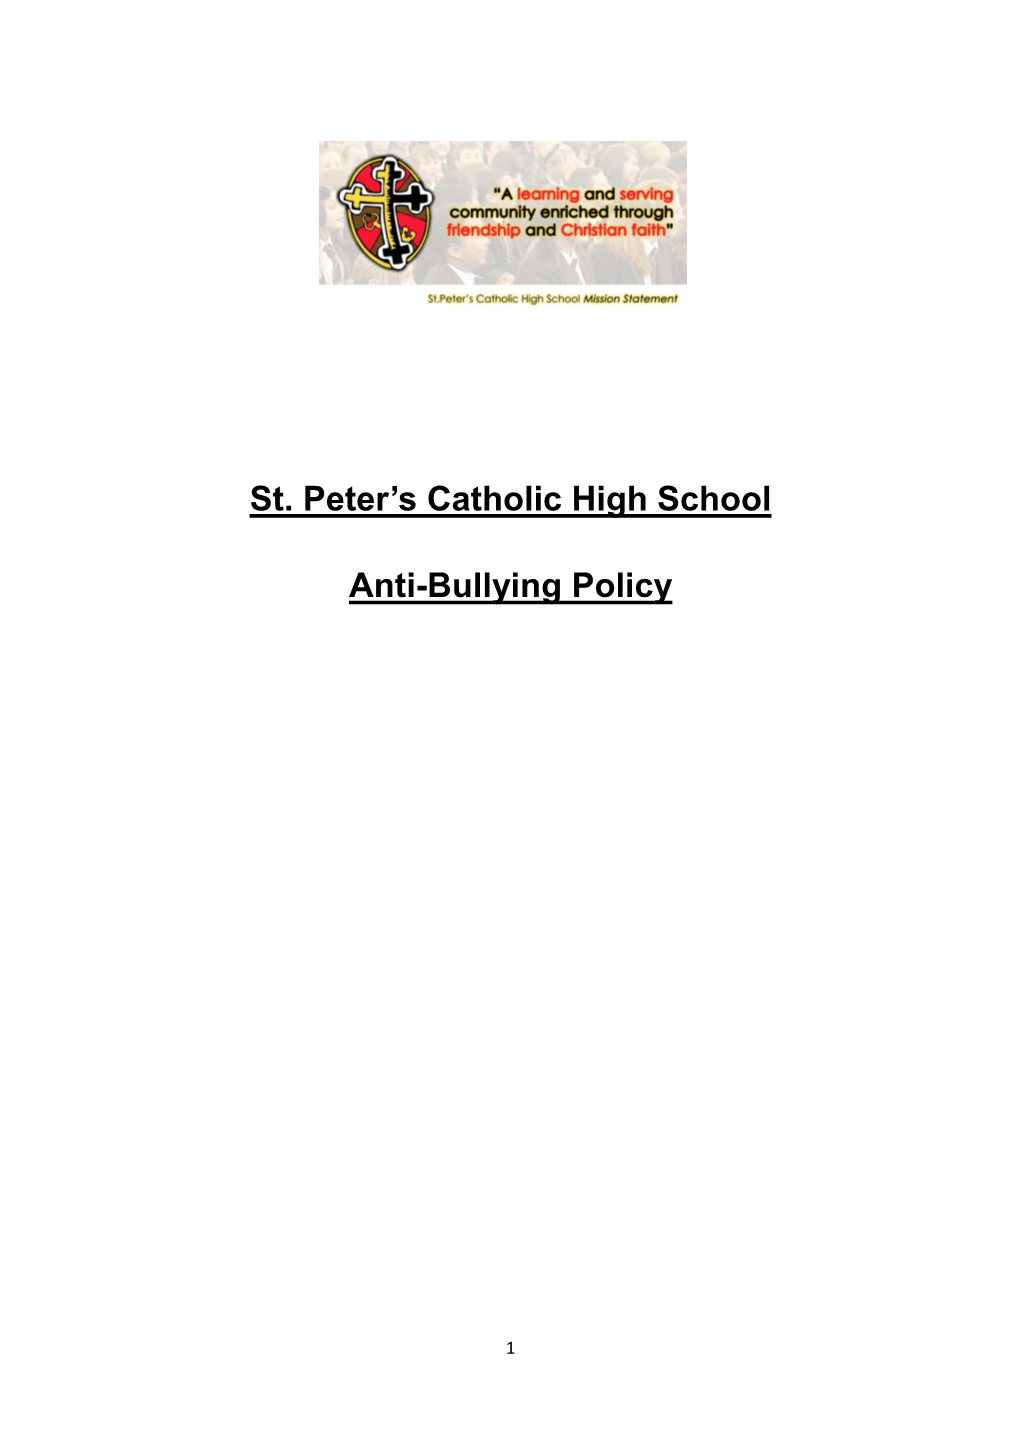 St. Peter's Catholic High School Anti-Bullying Policy